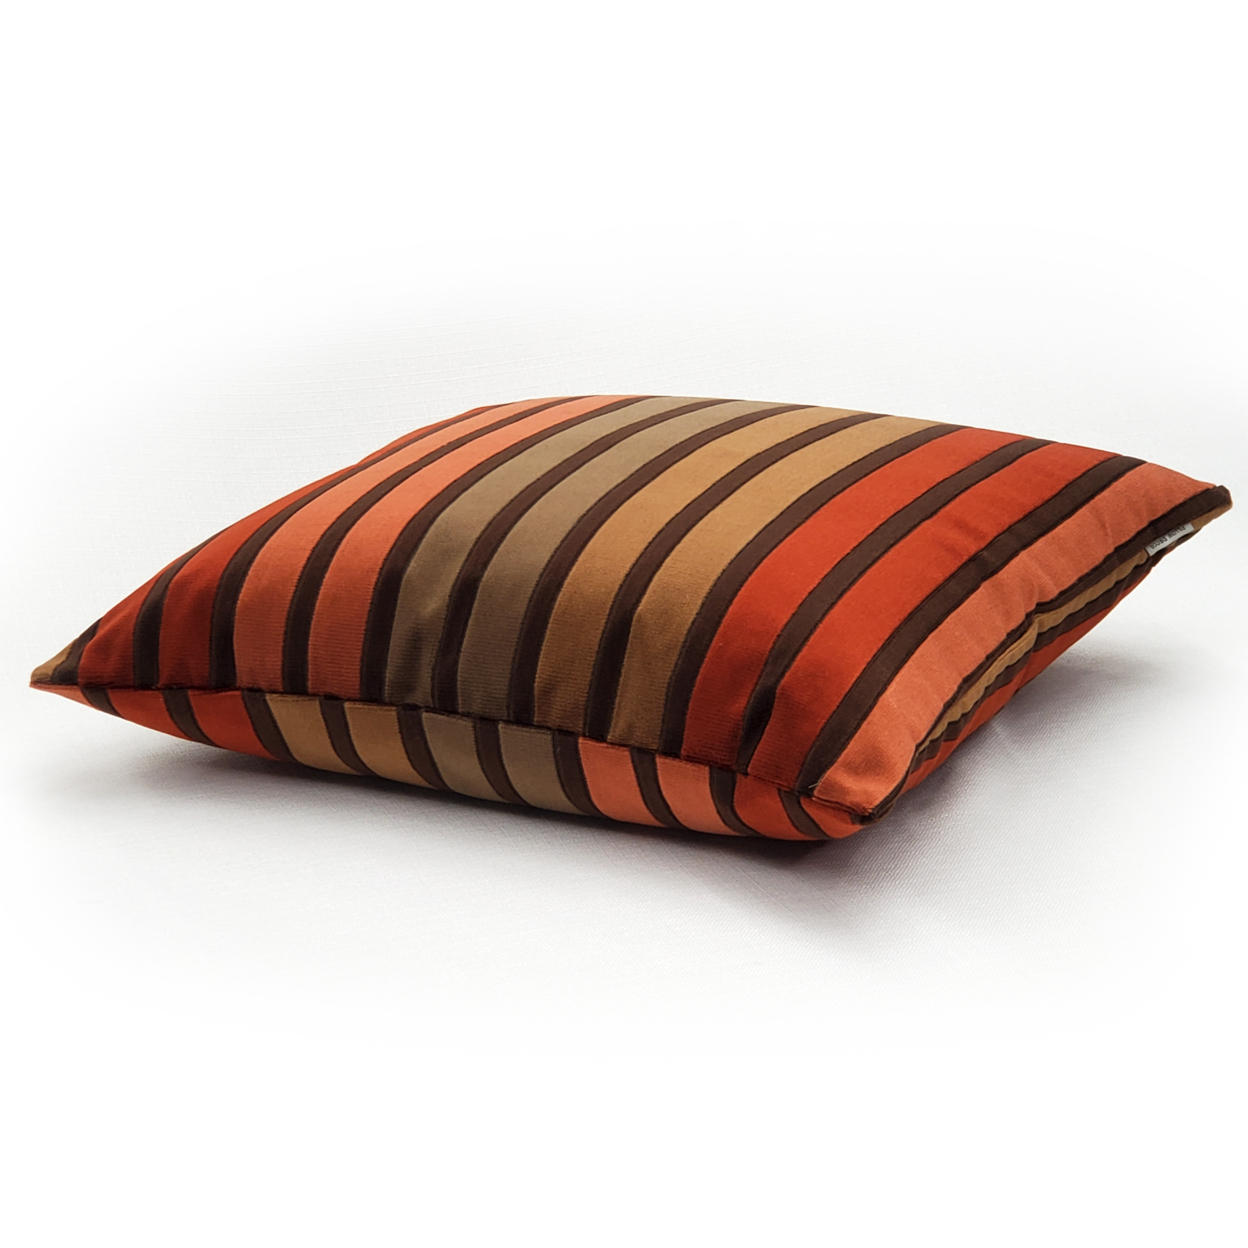 Canyon Stripes Textured Velvet Throw Pillow 20x20, With Polyfill Insert